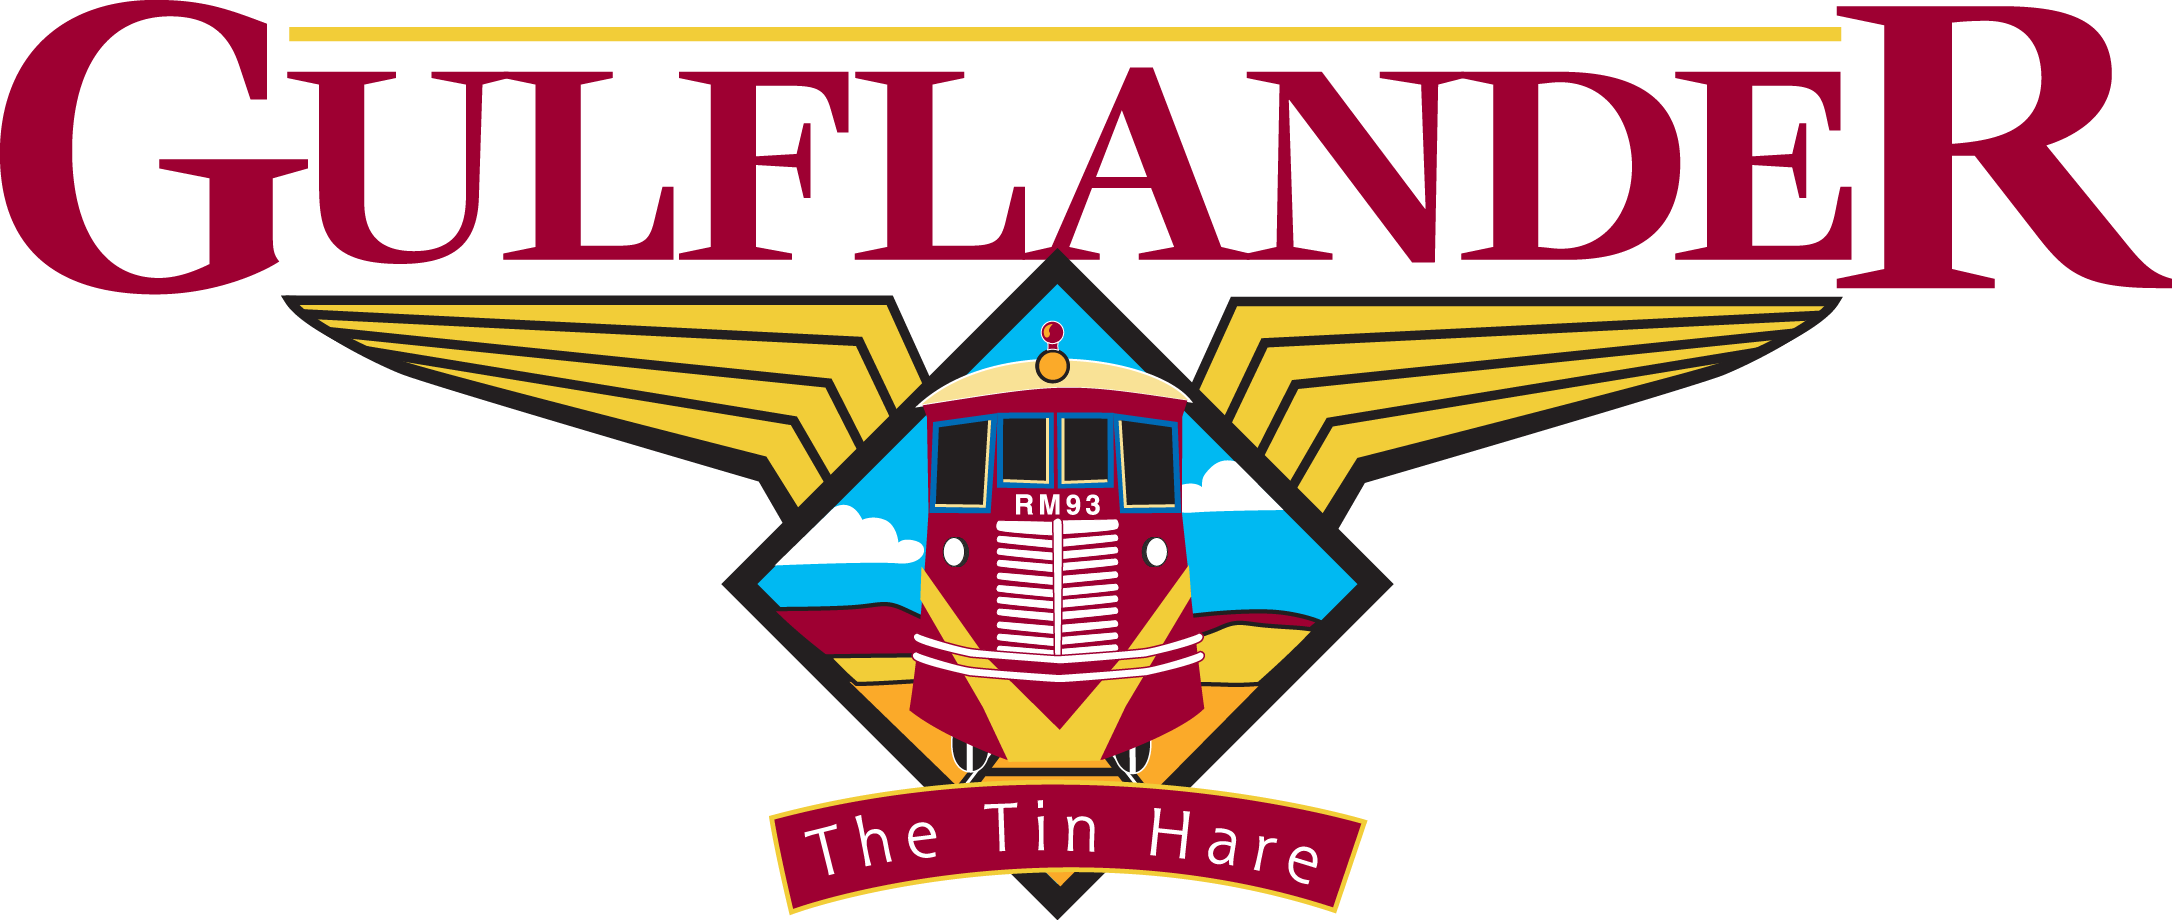 Gulflander - Logo